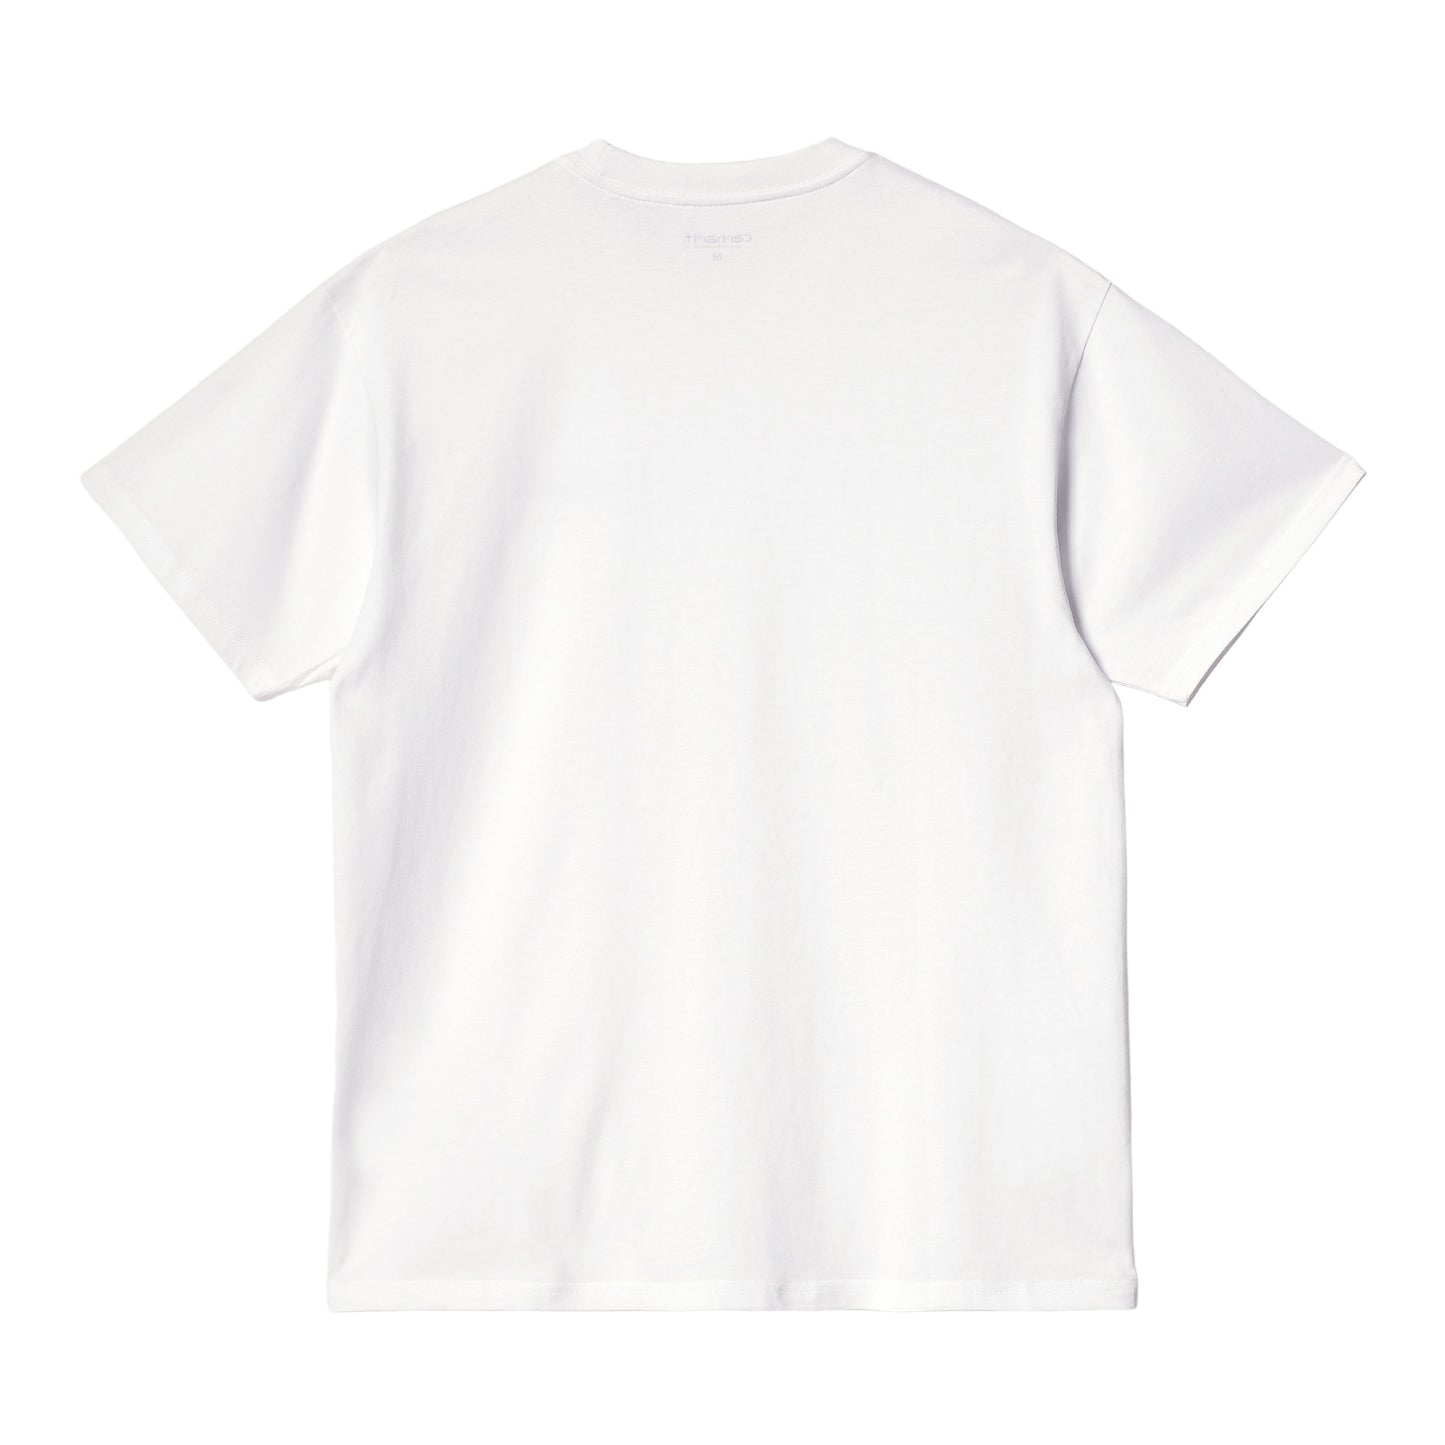 Carhartt WIP S/S Script Embroidery T-Shirt White Black